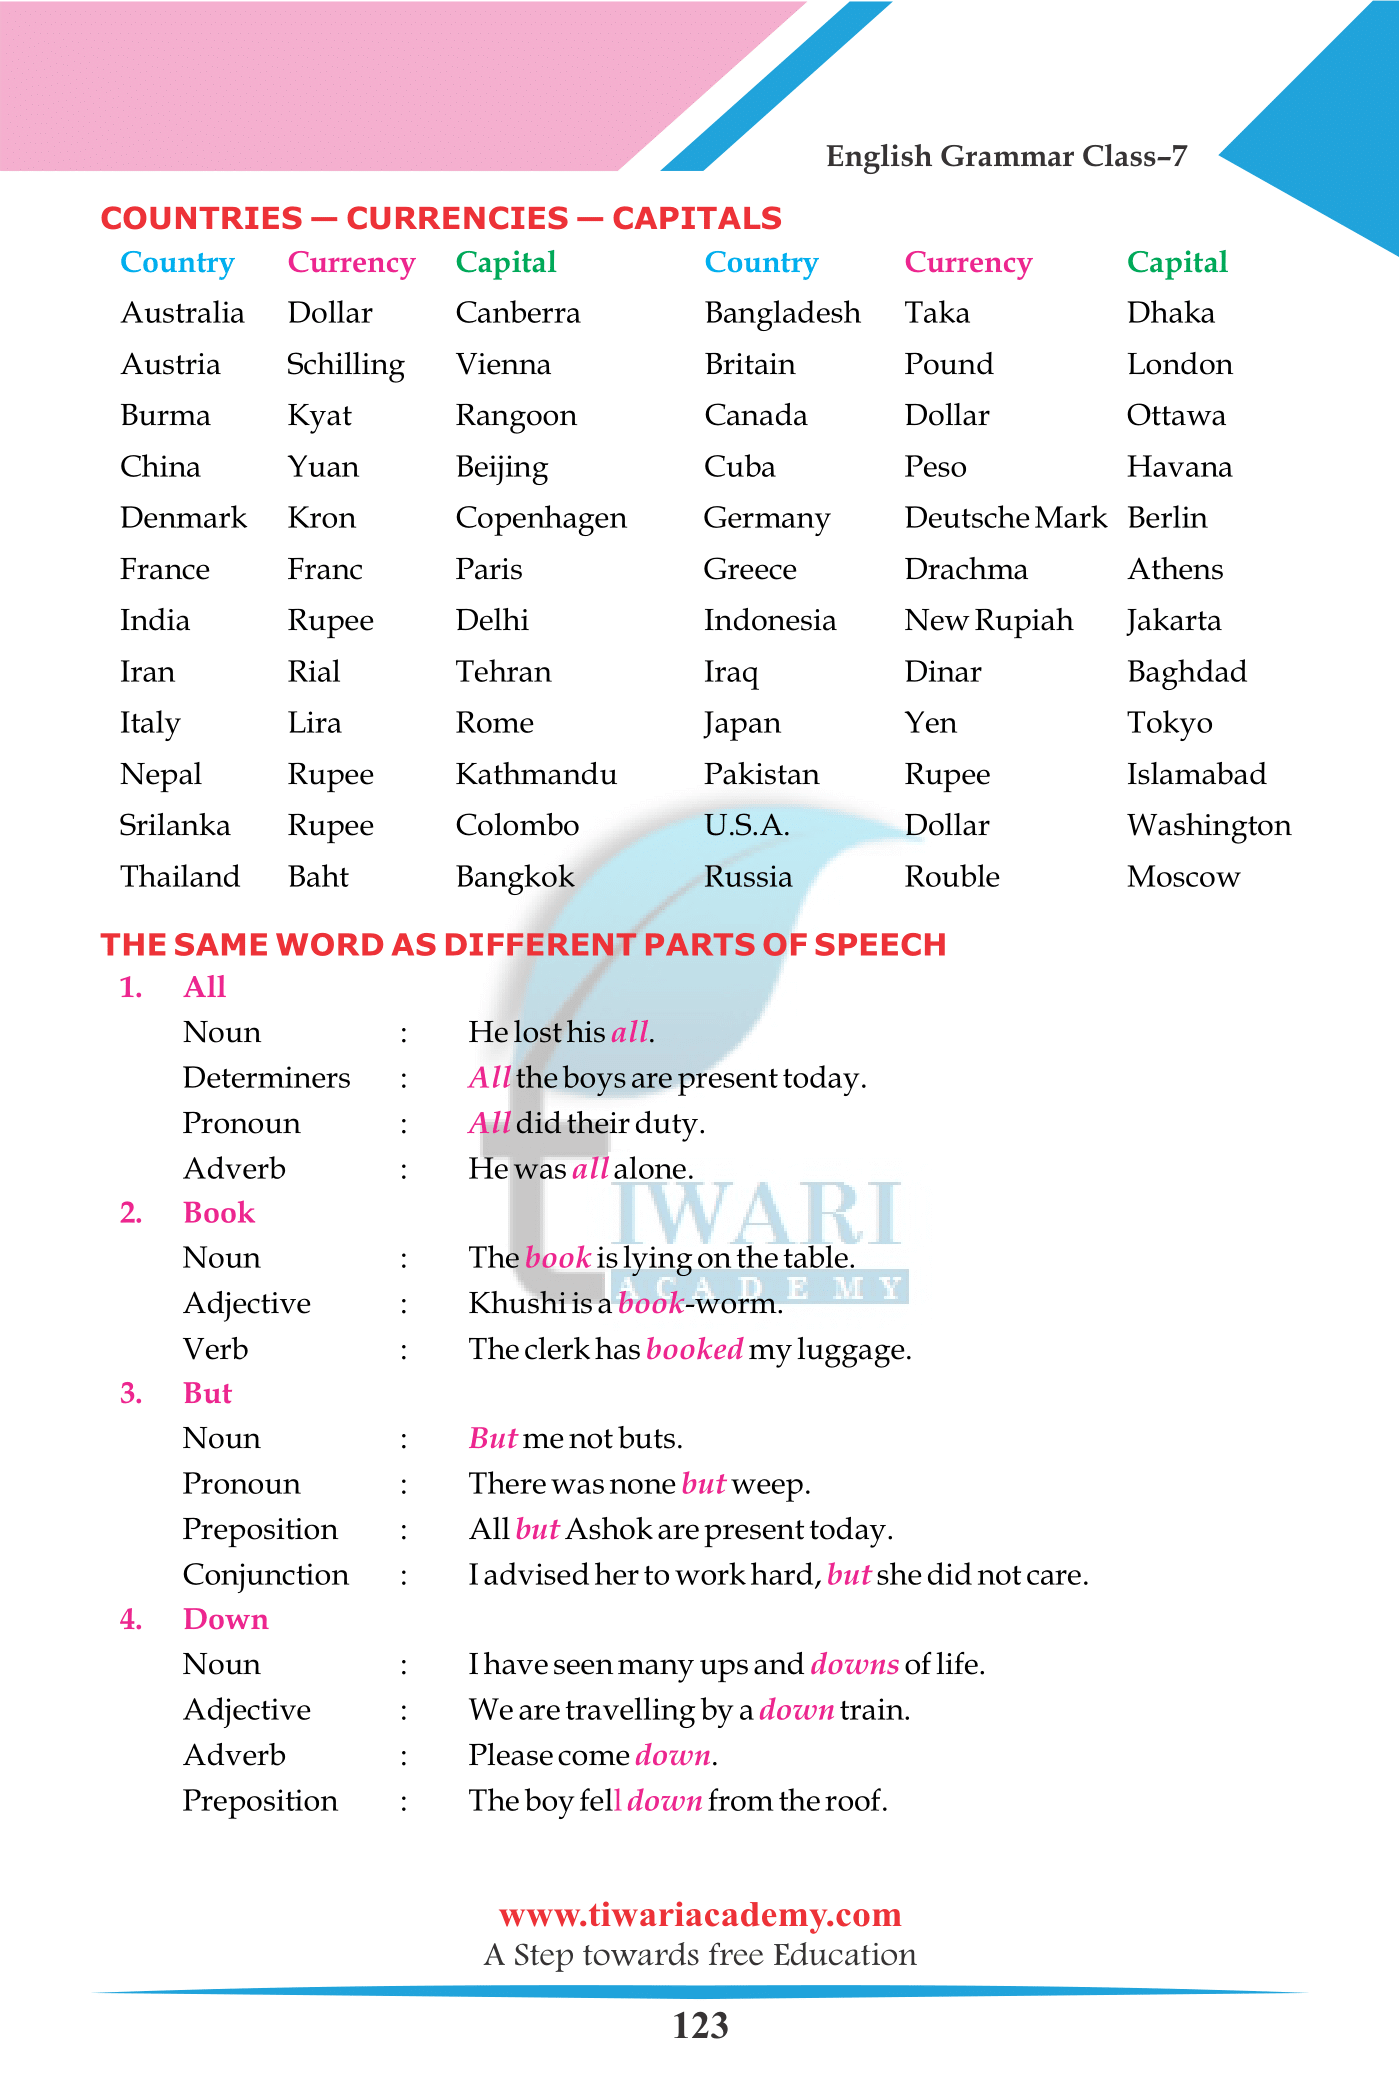 7th English Grammar Vocabulary